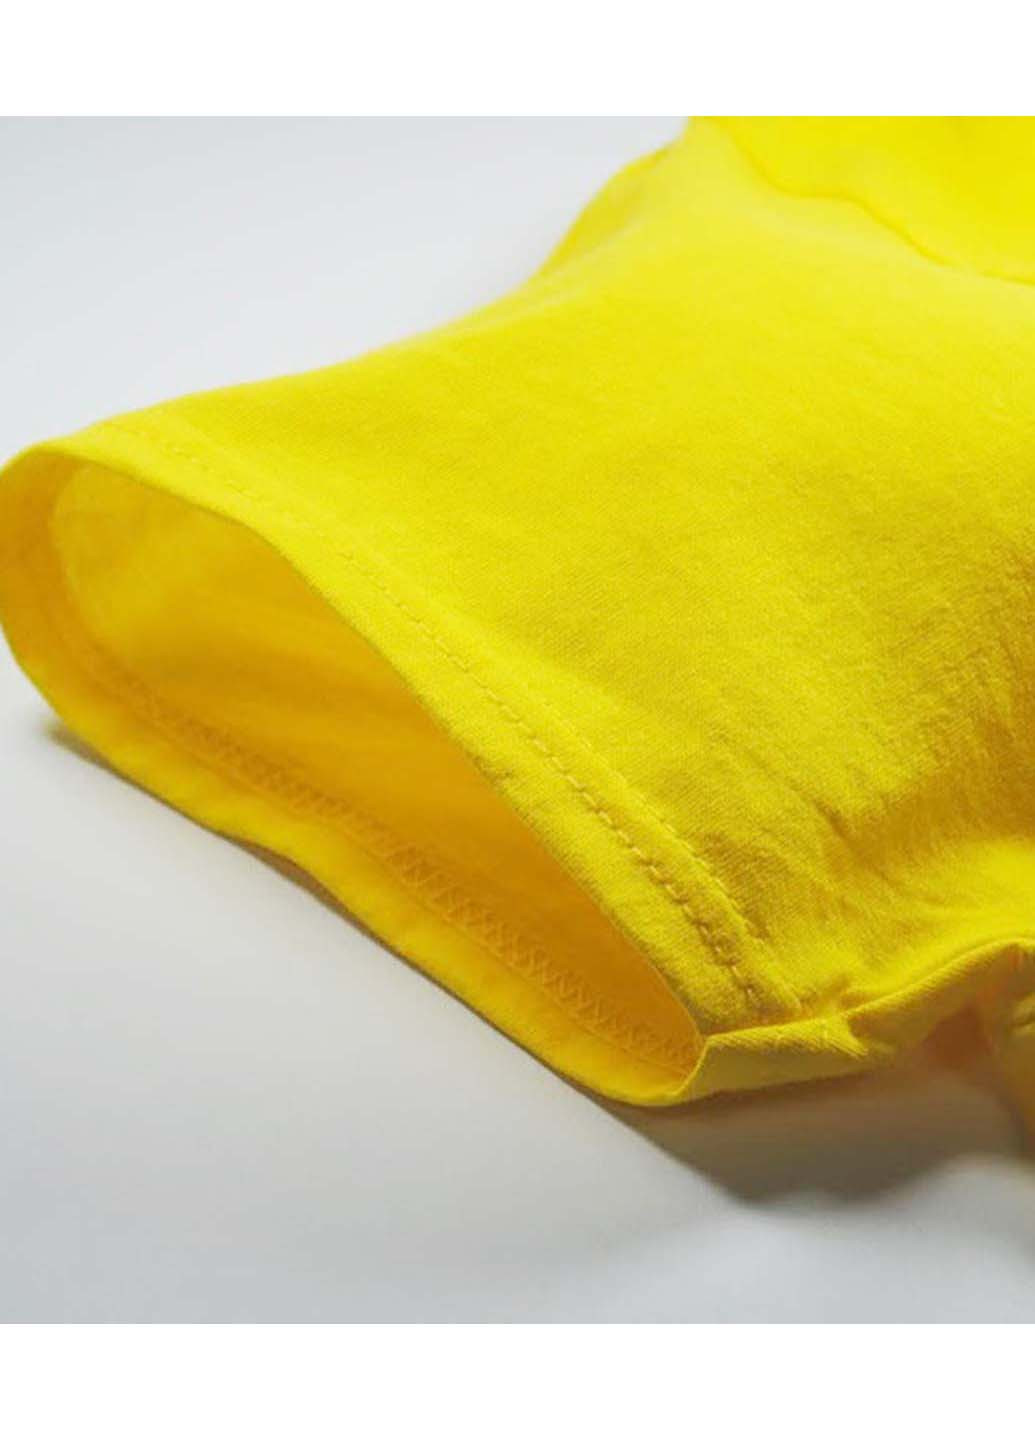 Желтая демисезон футболка Fruit of the Loom